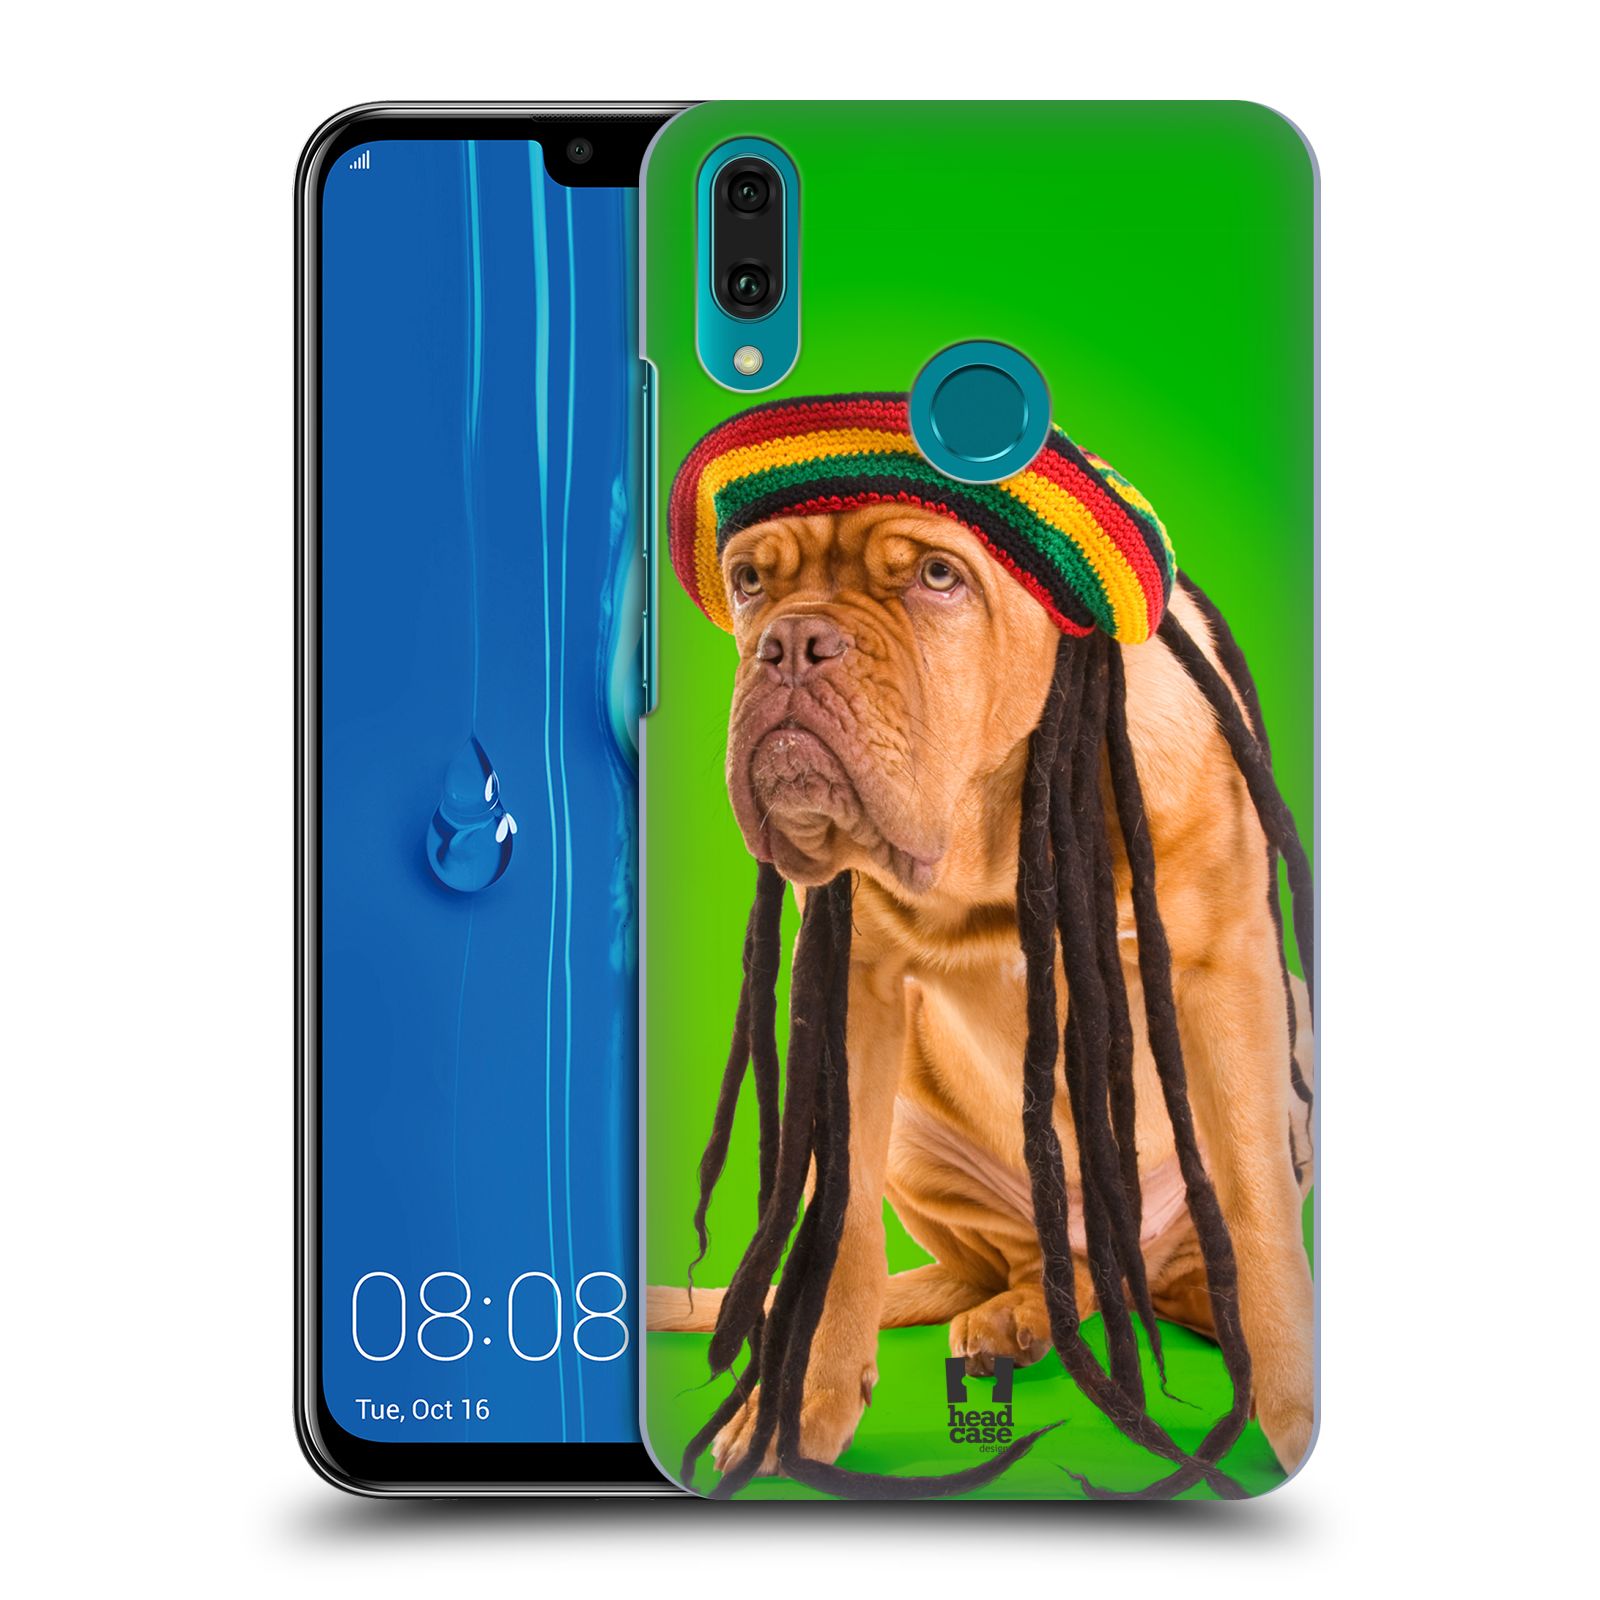 Pouzdro na mobil Huawei Y9 2019 - HEAD CASE - vzor Legrační zvířátka pejsek dredy Rastafarián